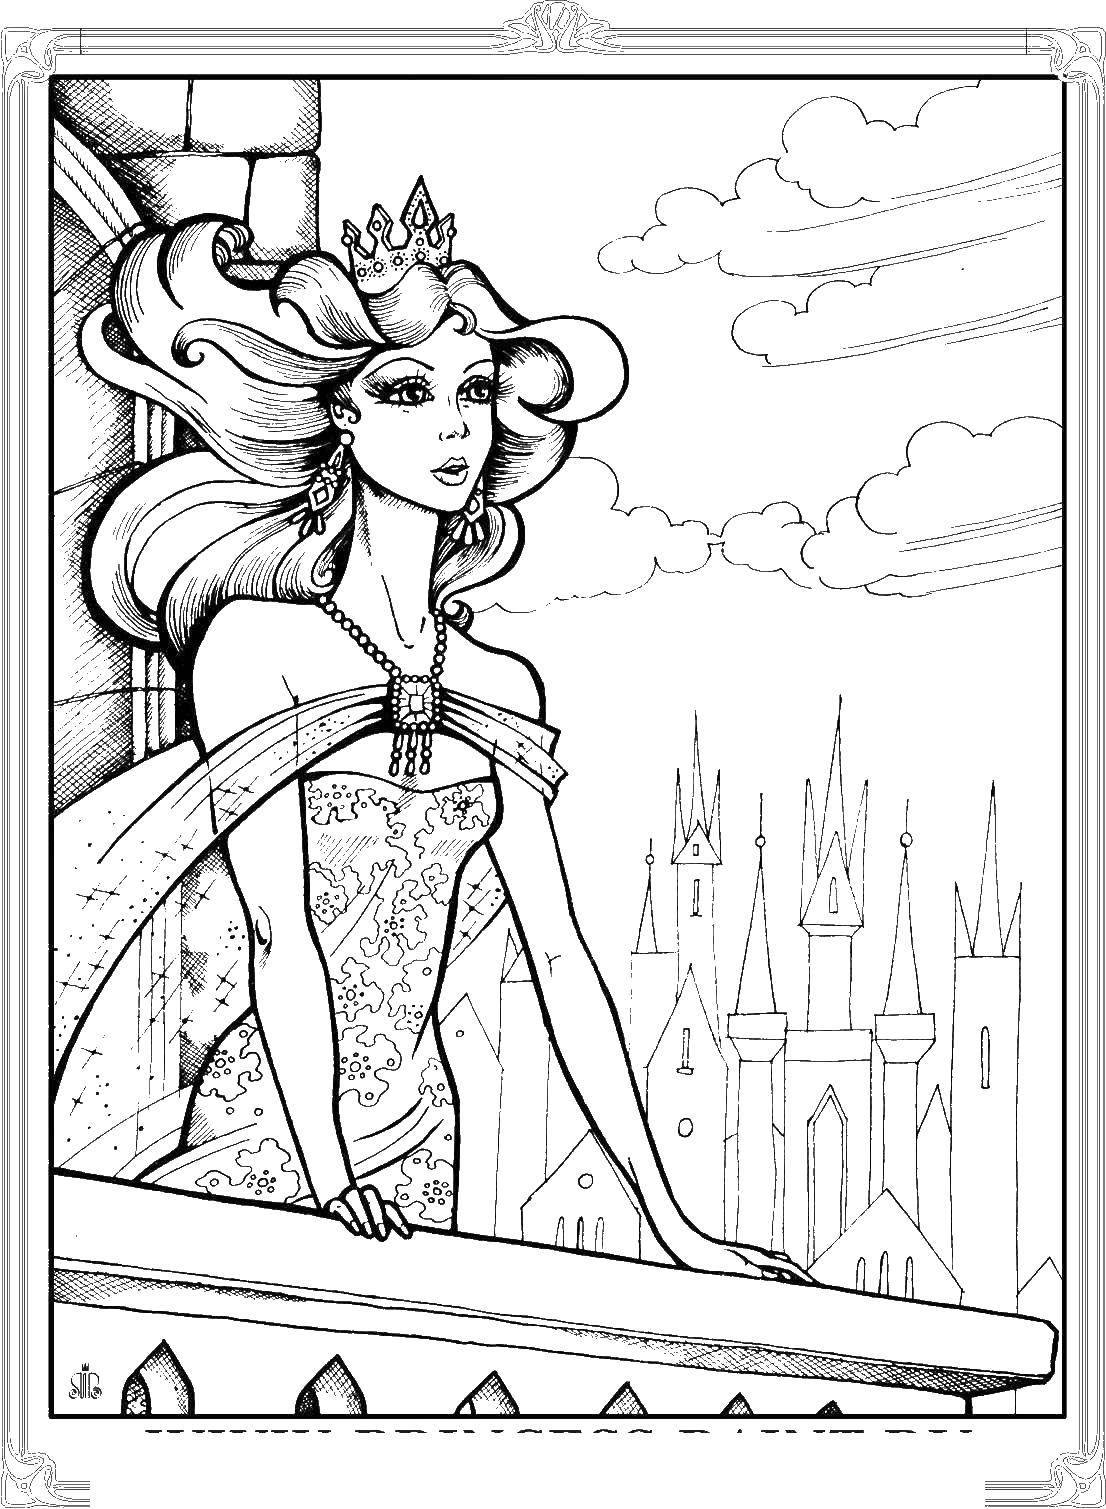 Coloring Princess on the balcony. Category Princess. Tags:  Princess, balcony.